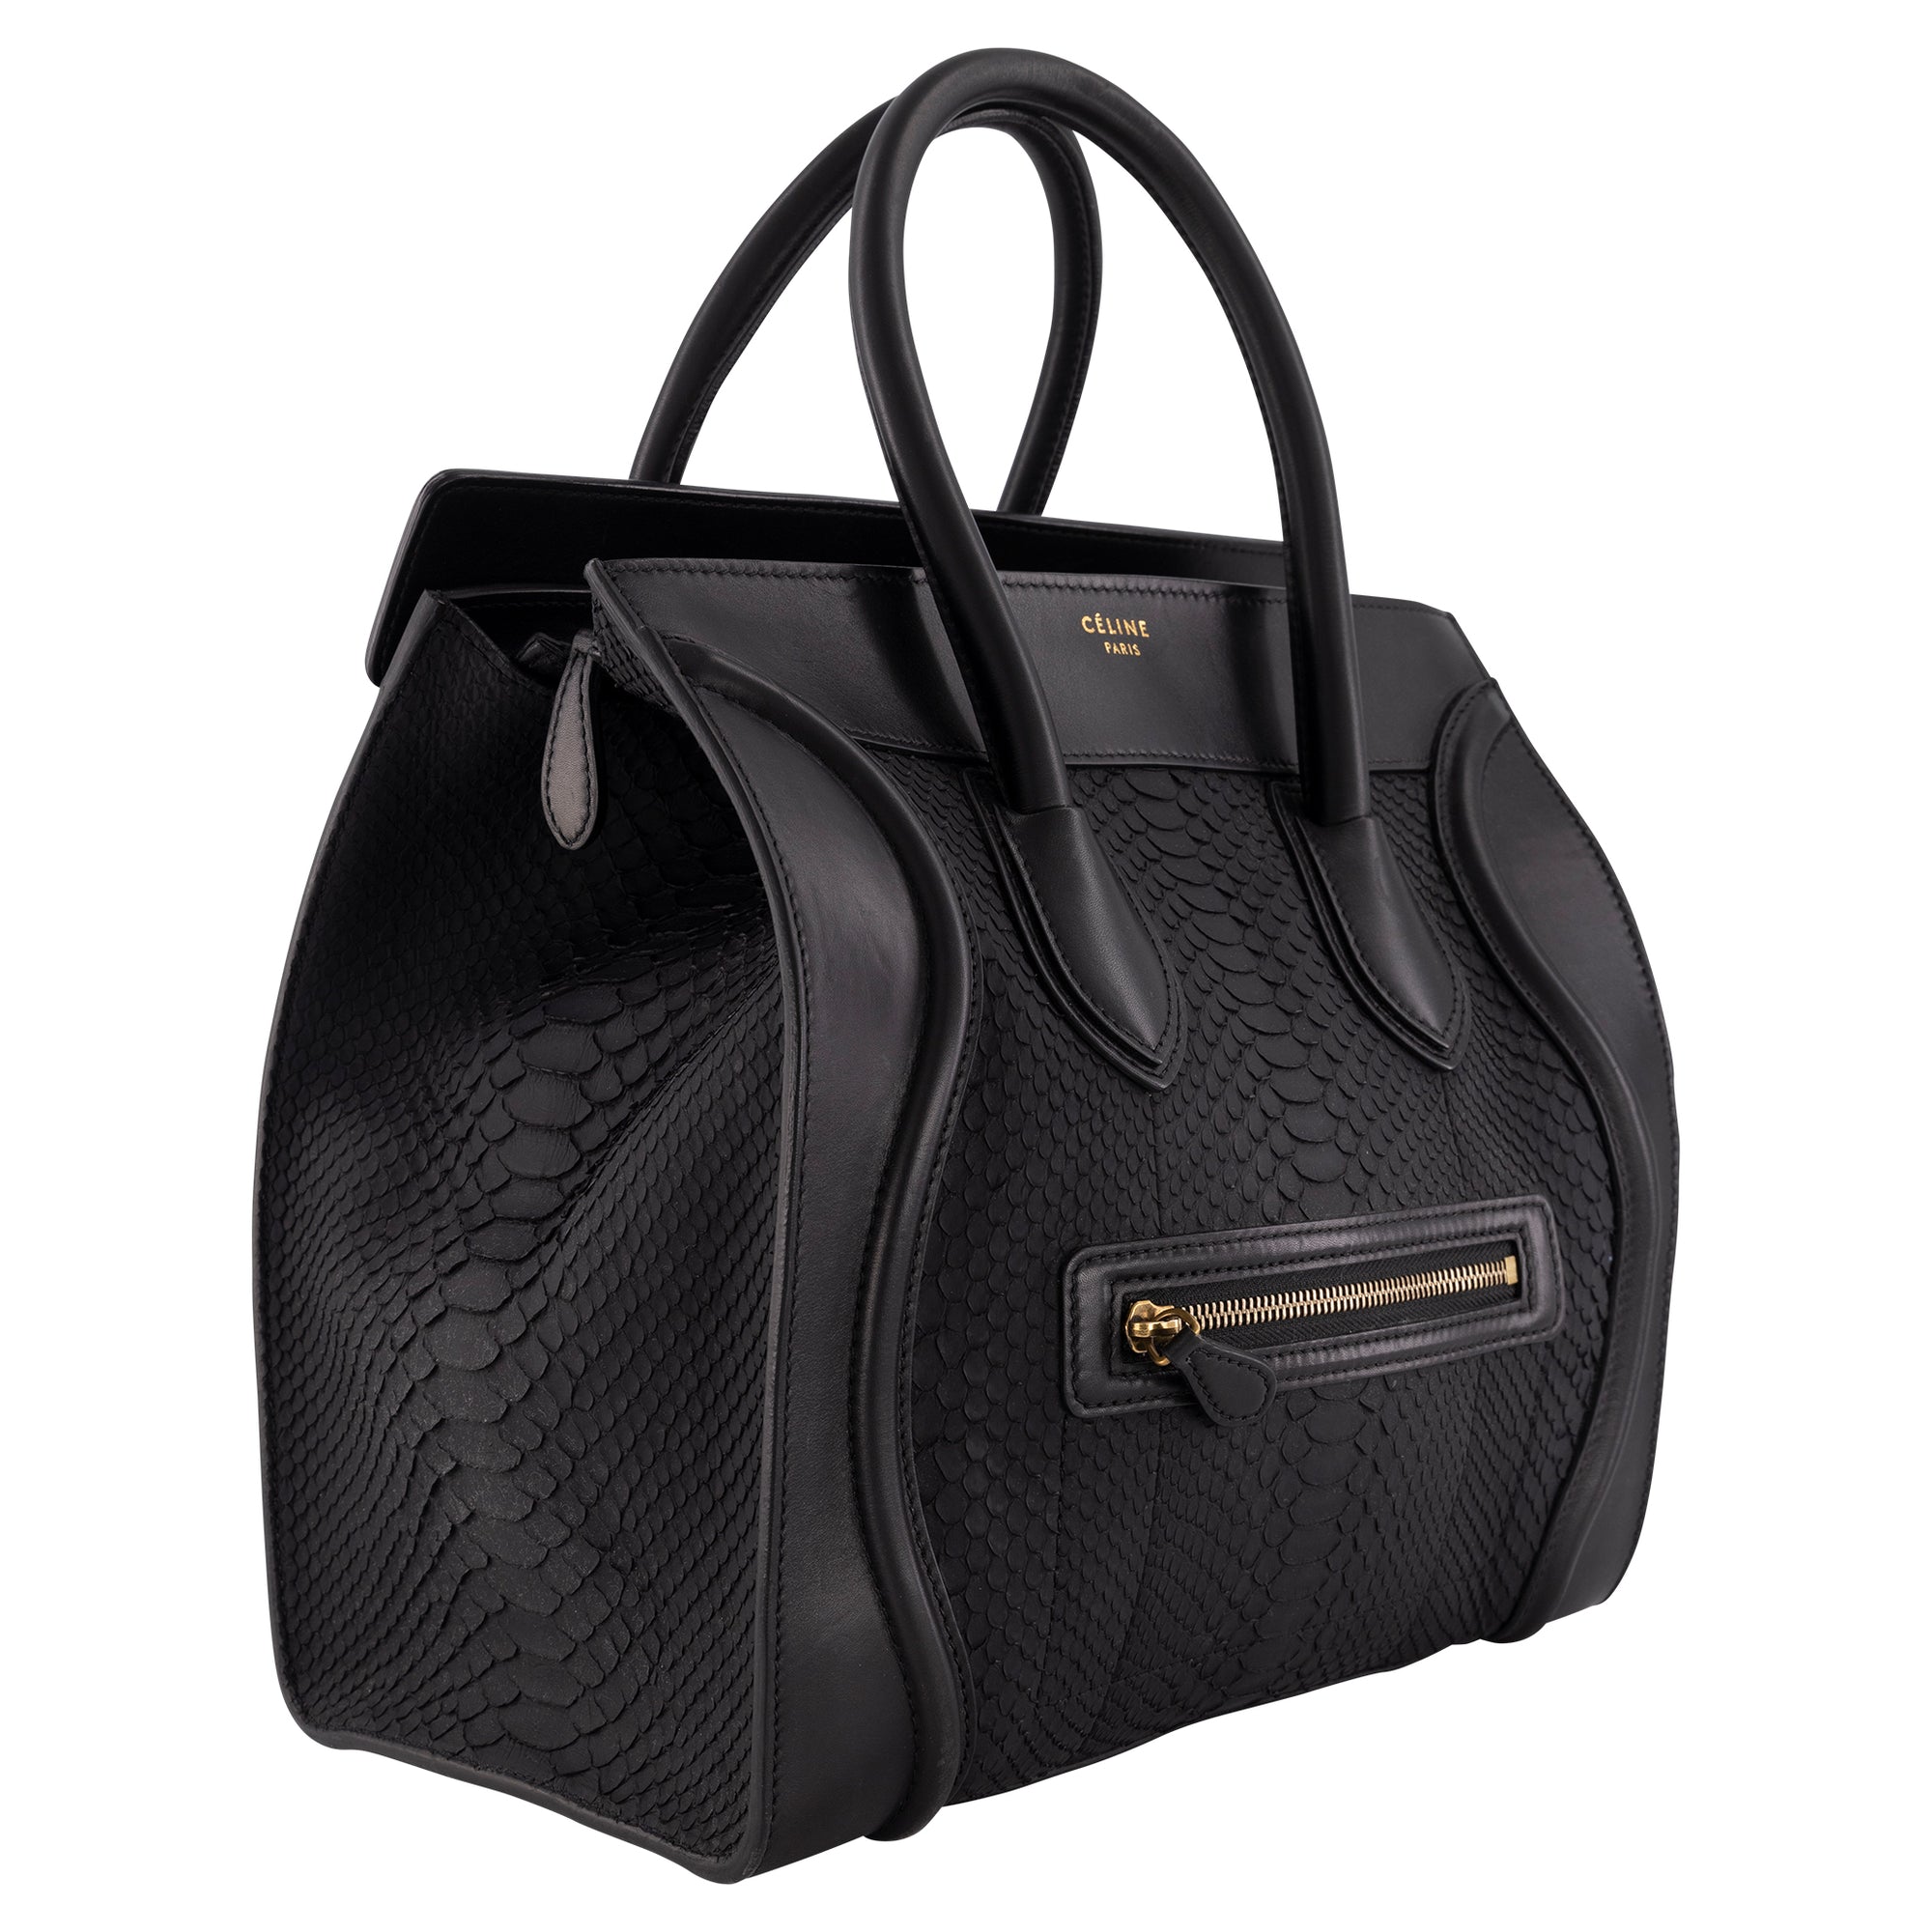 Céline Medium Luggage Handbag